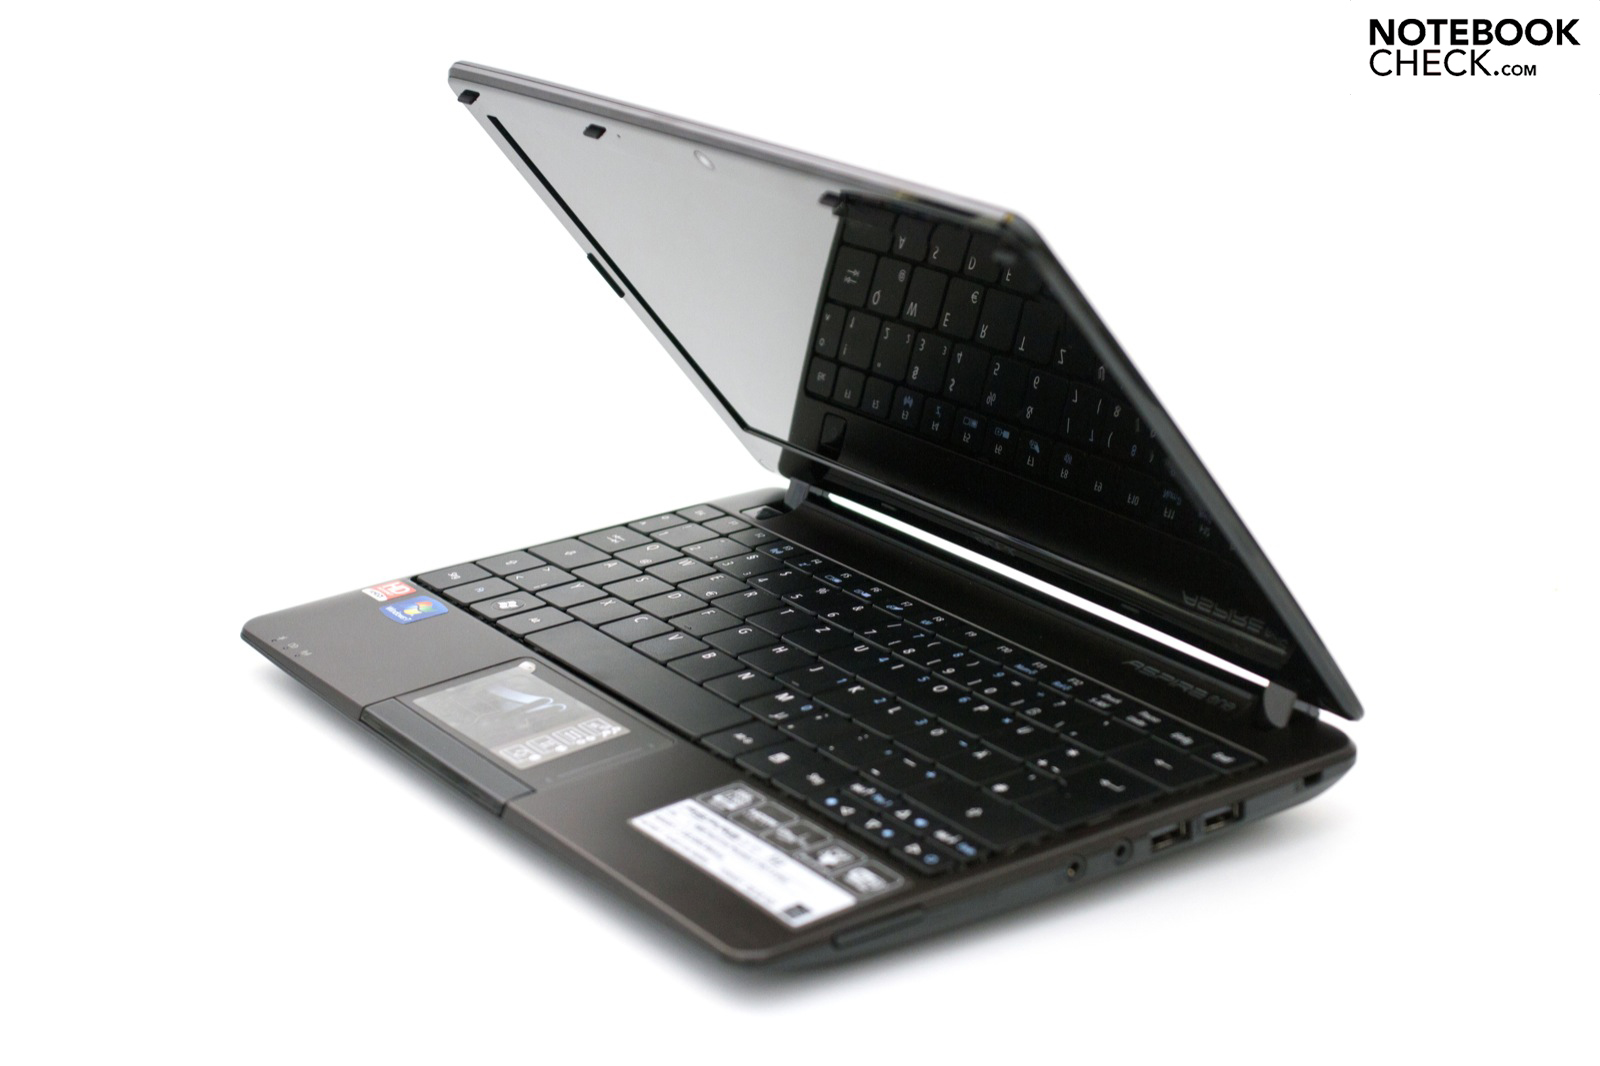 Betasten moeder Kaarsen Review Acer Aspire One 722 Netbook - NotebookCheck.net Reviews